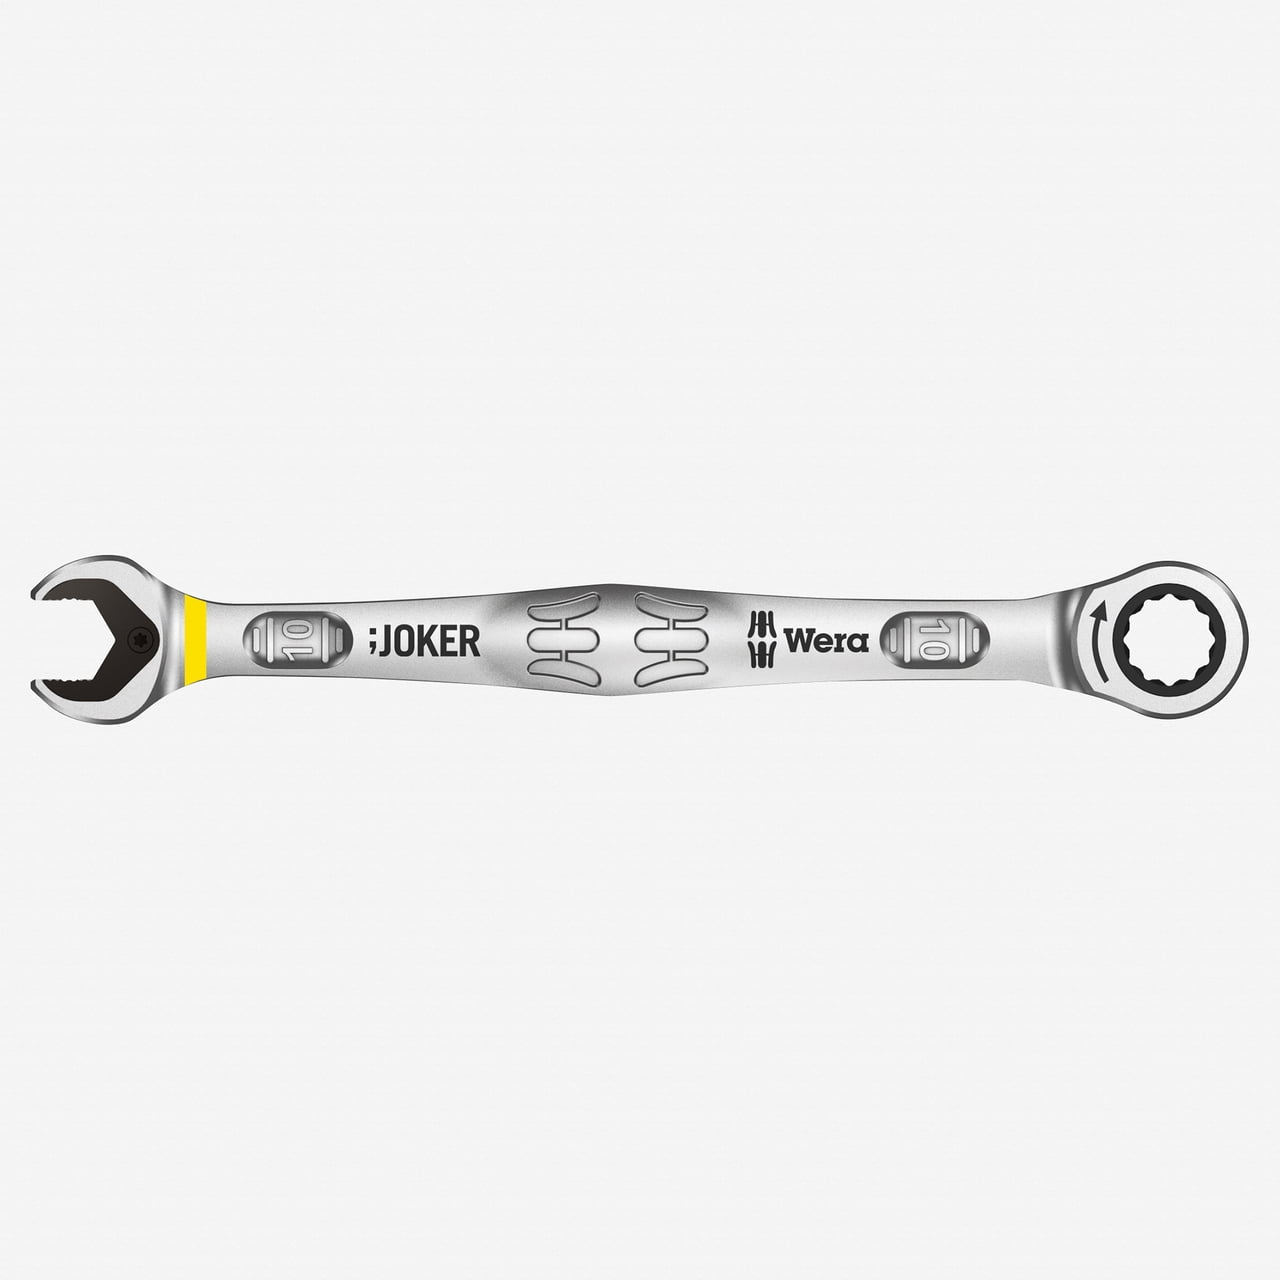 WERA 10mm JOKER Combination/Combi Open End Ratchet Ring Spanner Wrench 073270 